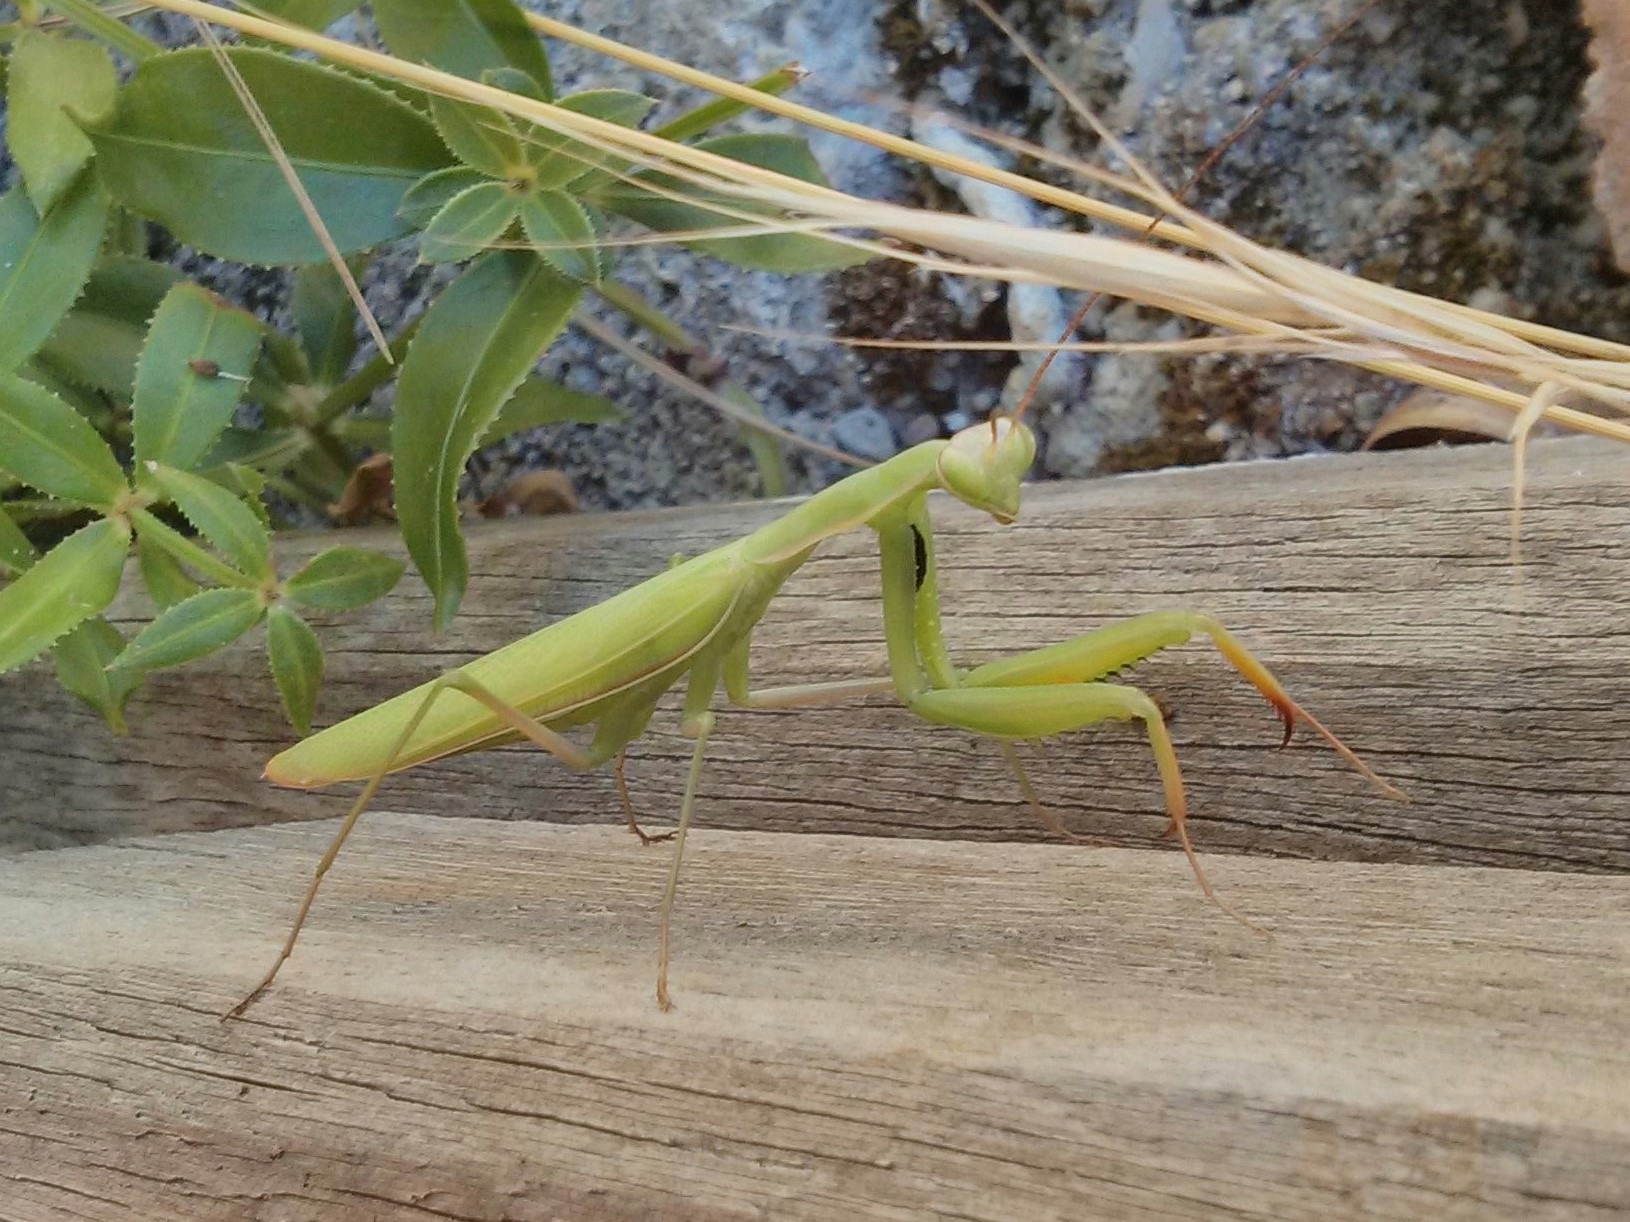 Preying mantis